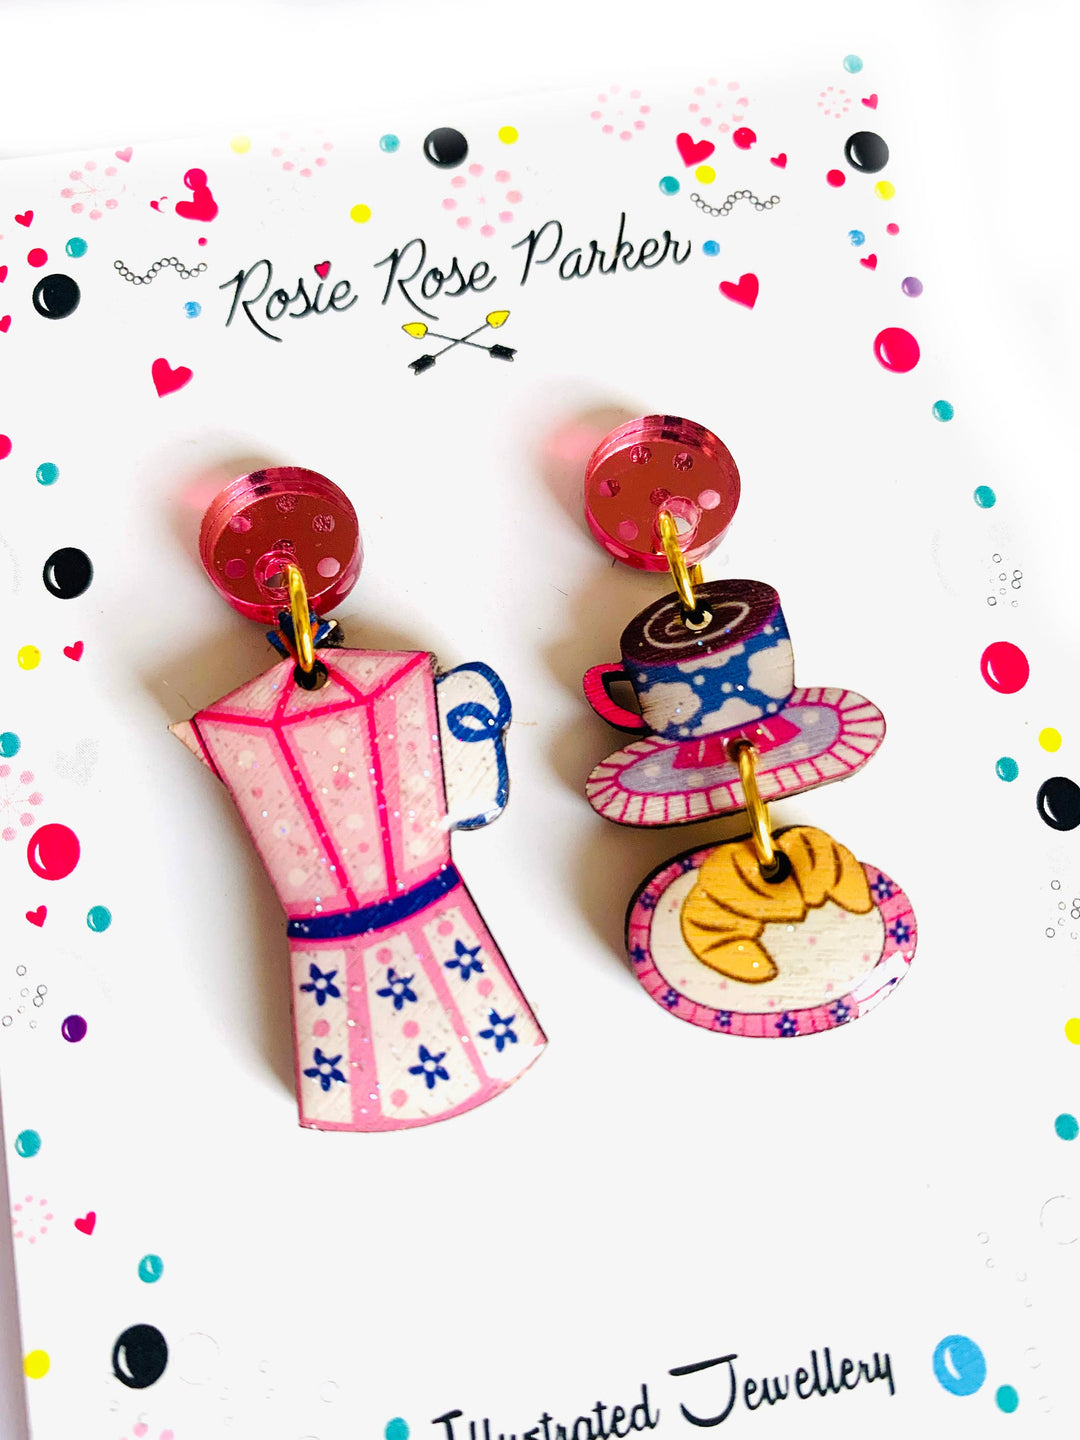 Croissants & Coffee Earrings by Rosie Rose Parker